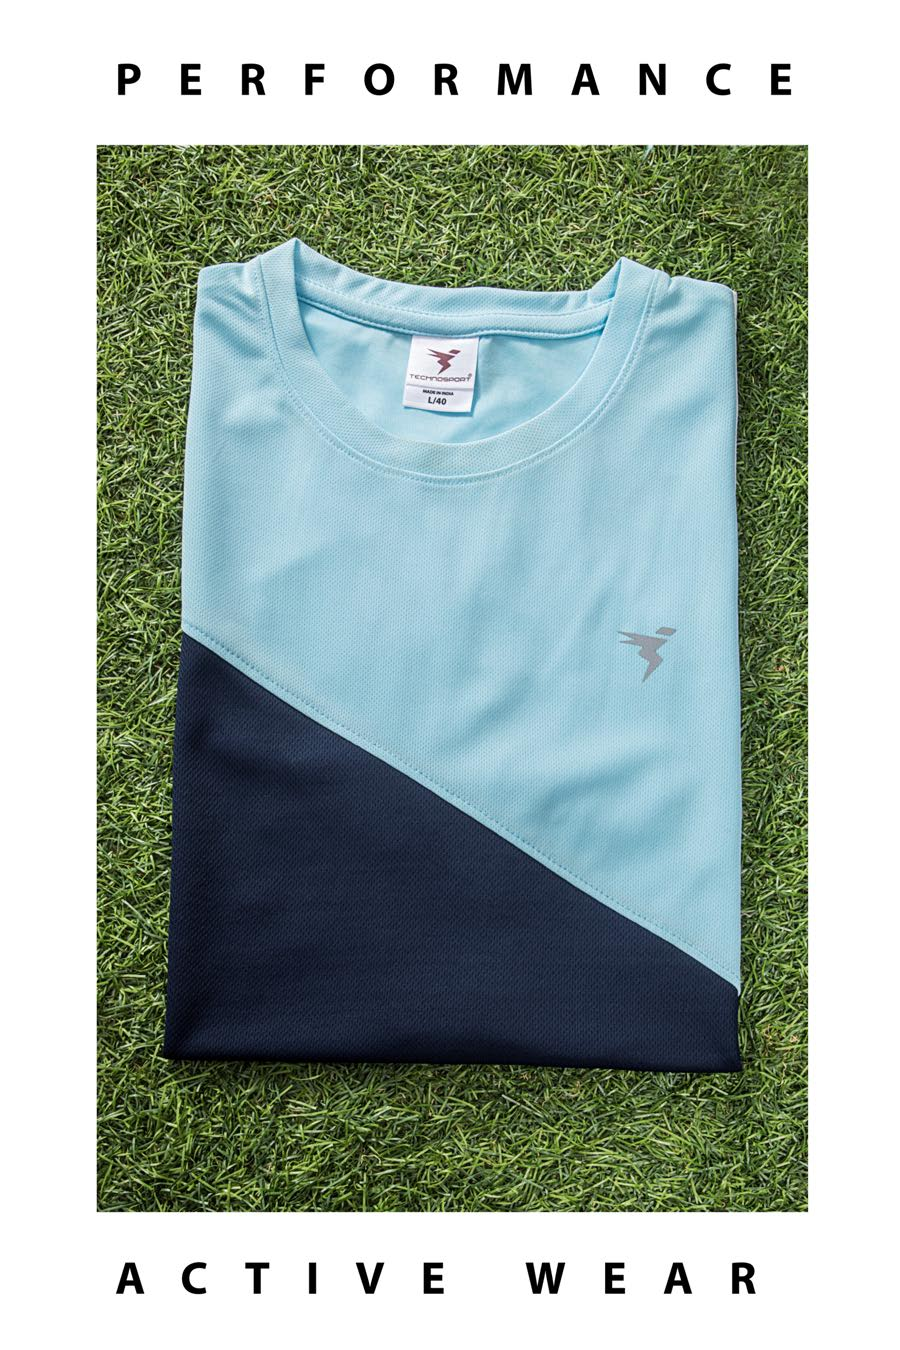 TechnoSport Crew Neck Half Sleeve Dry Fit T-Shirt for Men P 521 Navy Sky Blue